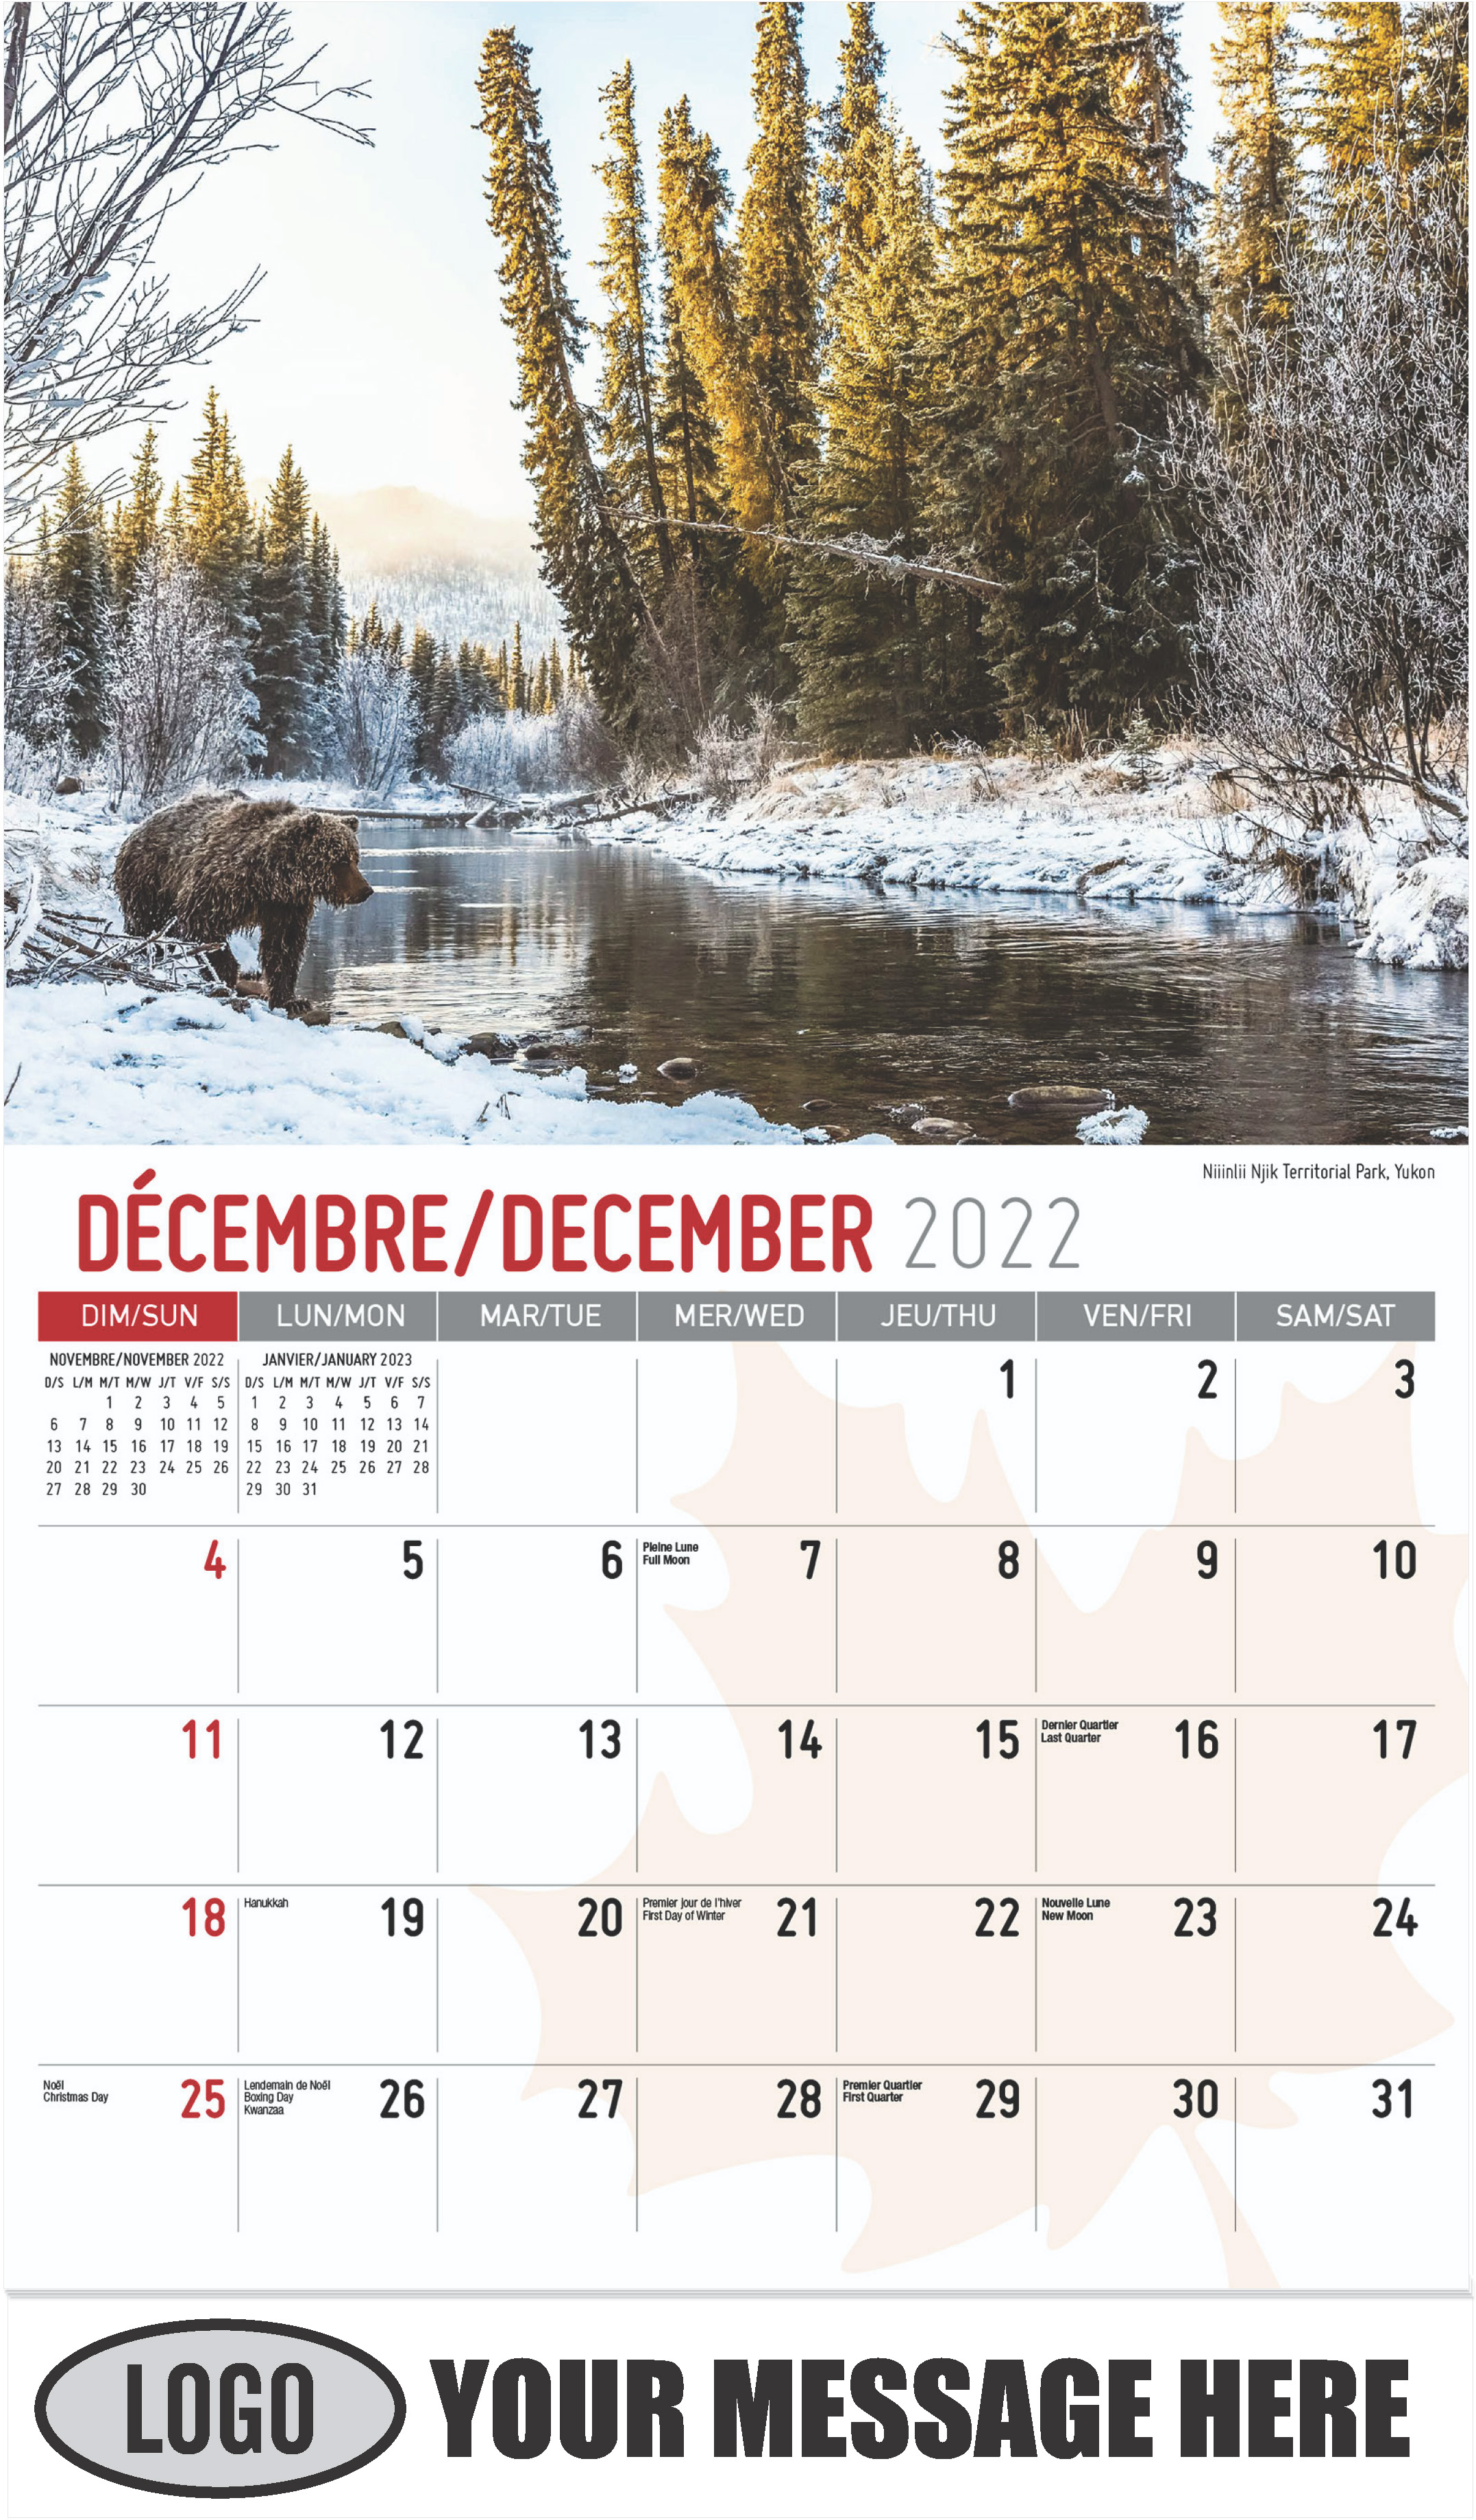 Niiinlii Njik Territorial Park, Yukon - December 2022 - Scenes of Canada(French-English bilingual) 2023 Promotional Calendar